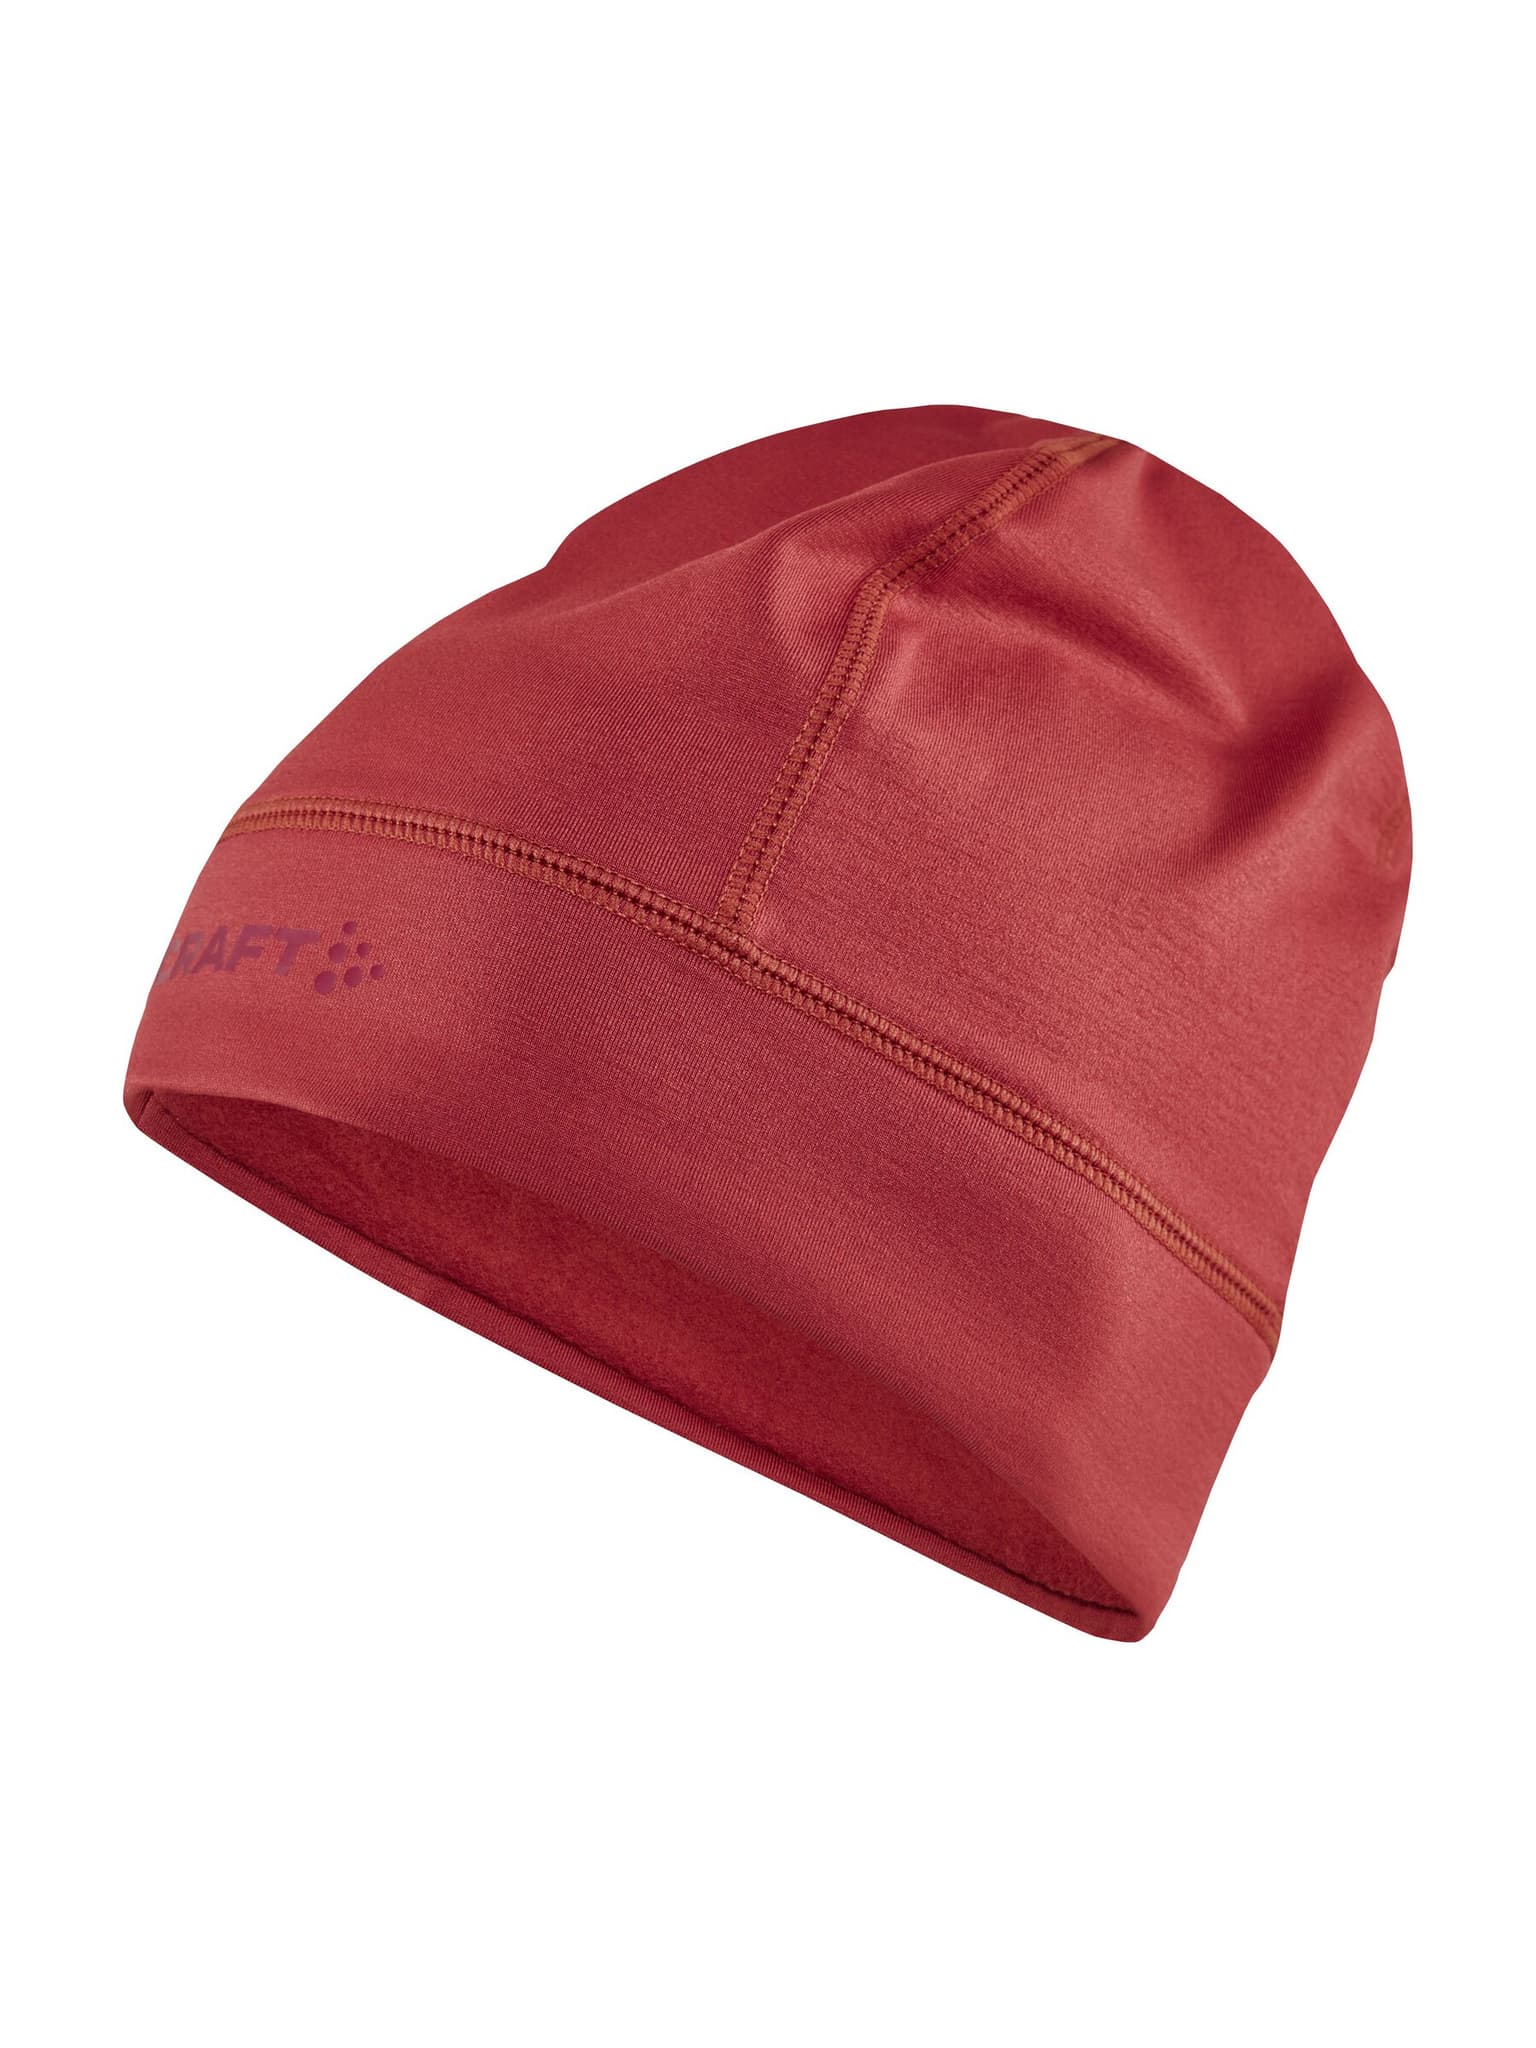 Craft Craft CORE ESSENCE THERMAL HAT Mütze rot 1